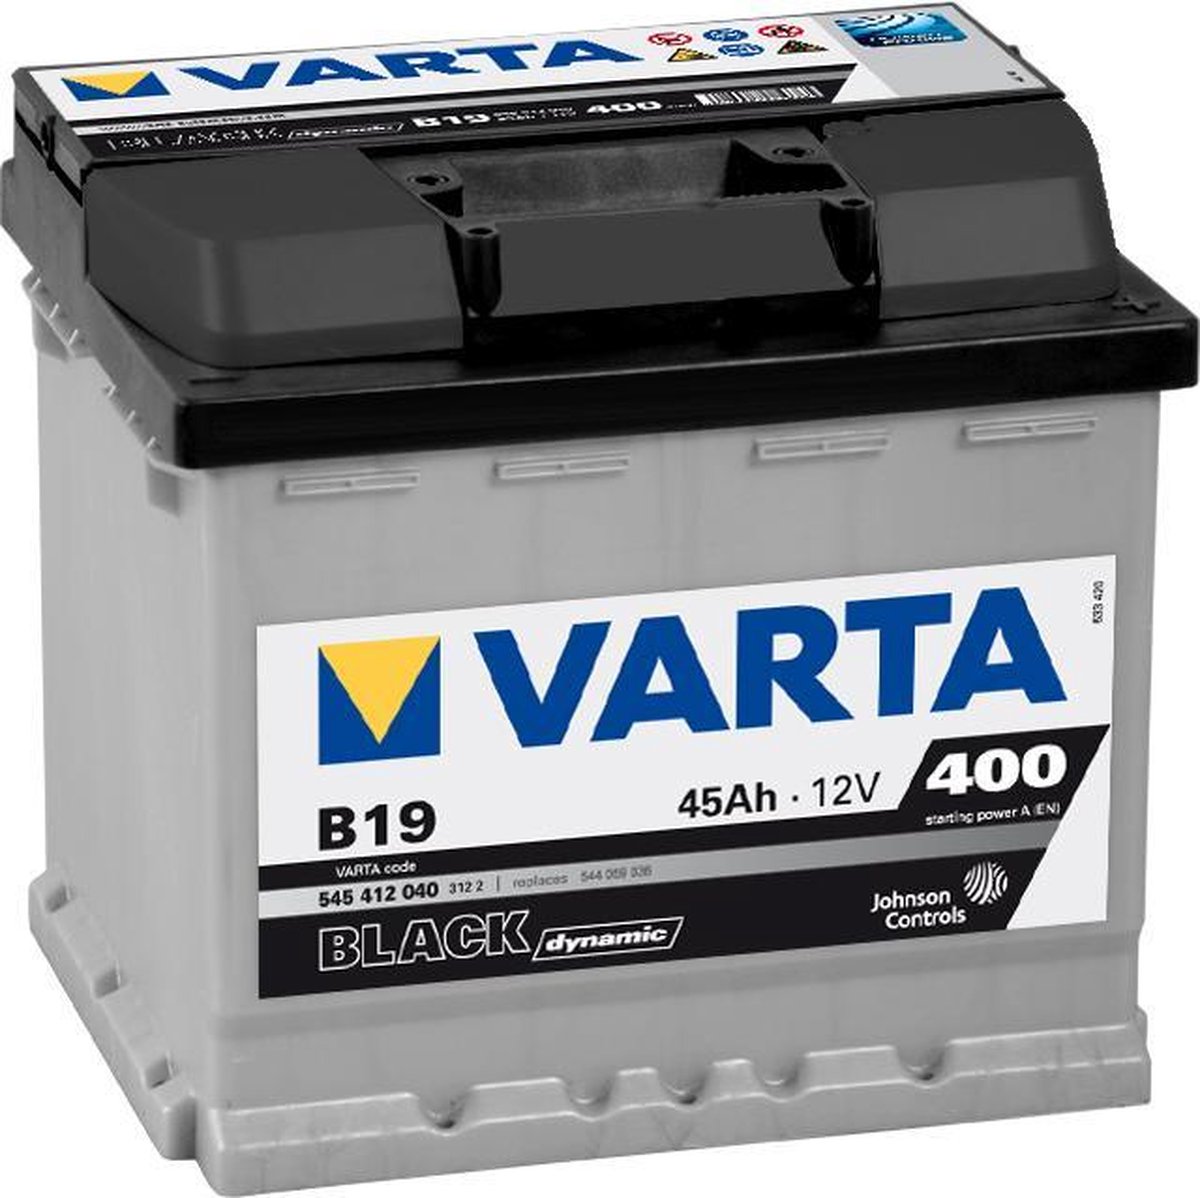 Batterie de démarrage Varta BLACK Dynamic 545412 040 3122 B19 12Volt 45 Ah  400A / EN